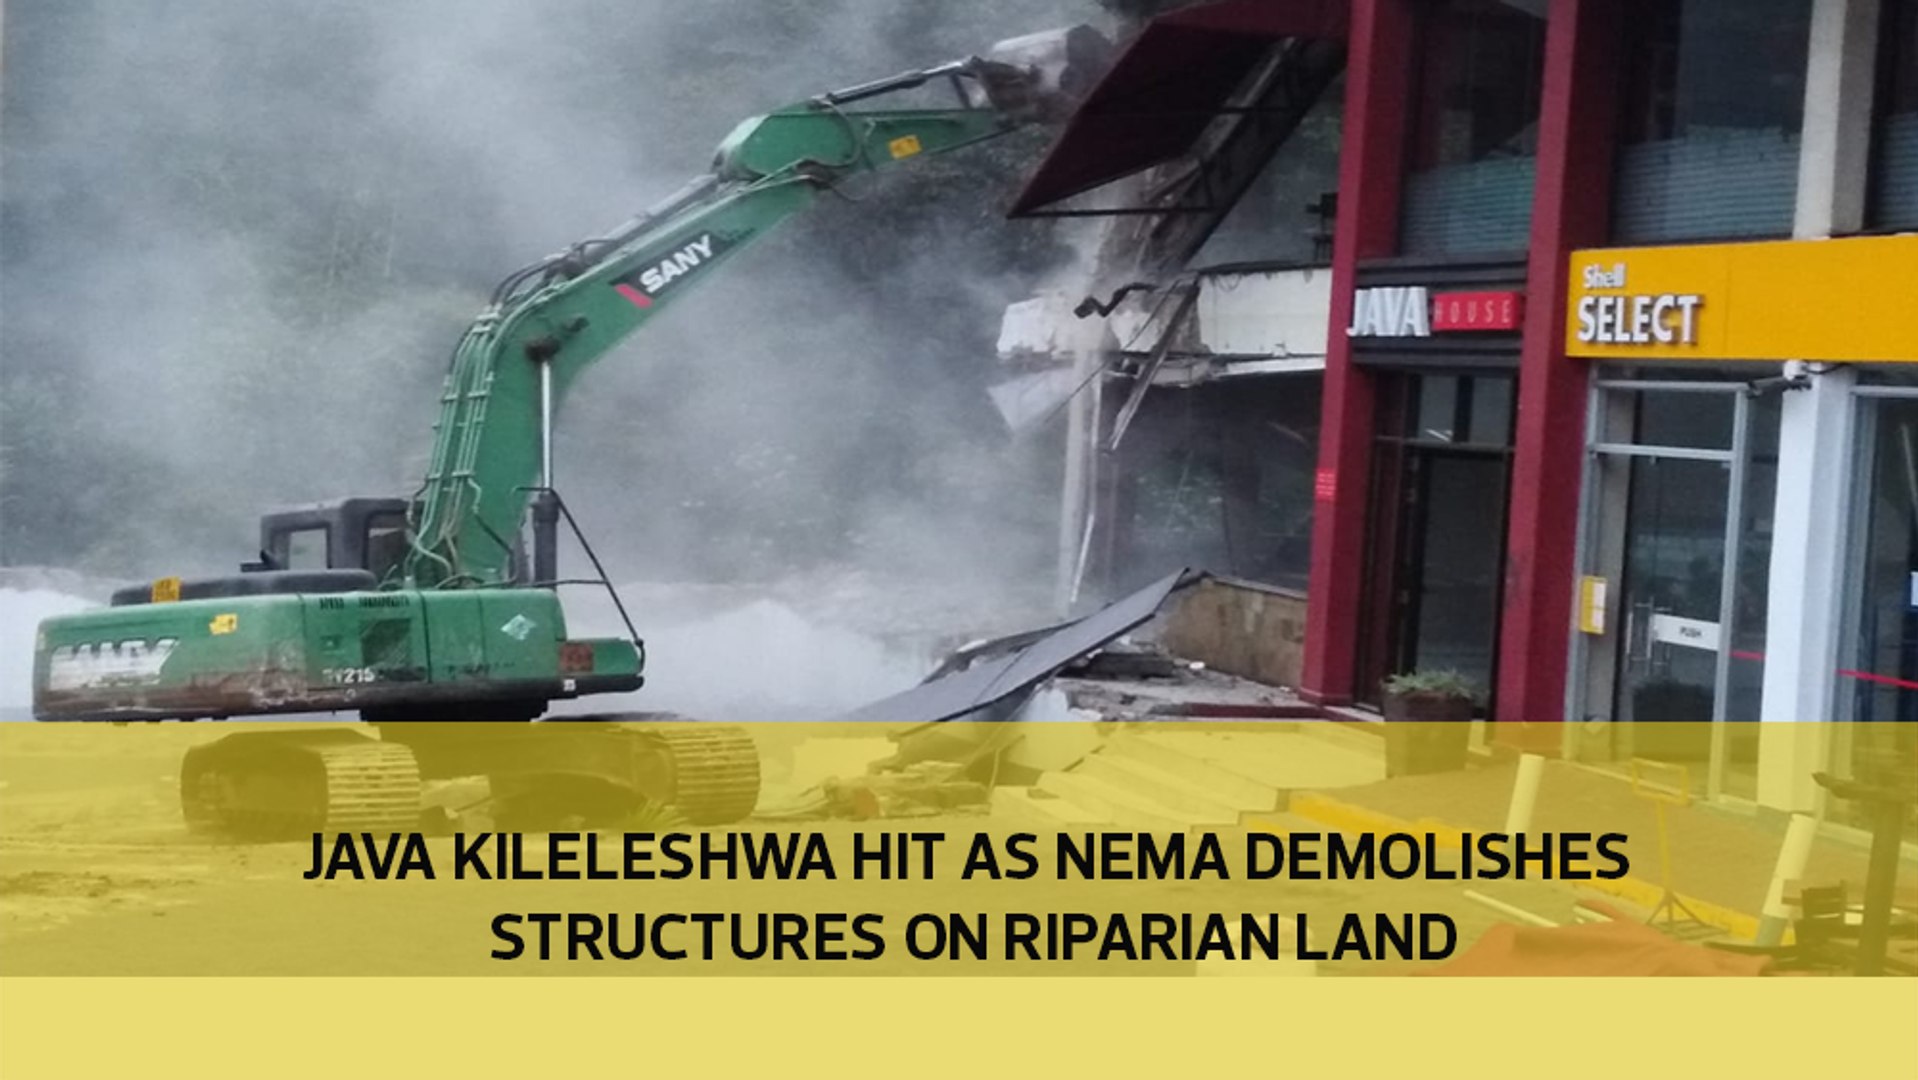 Java Kileleshwa hit as NEMA demolishes structures on riparian land